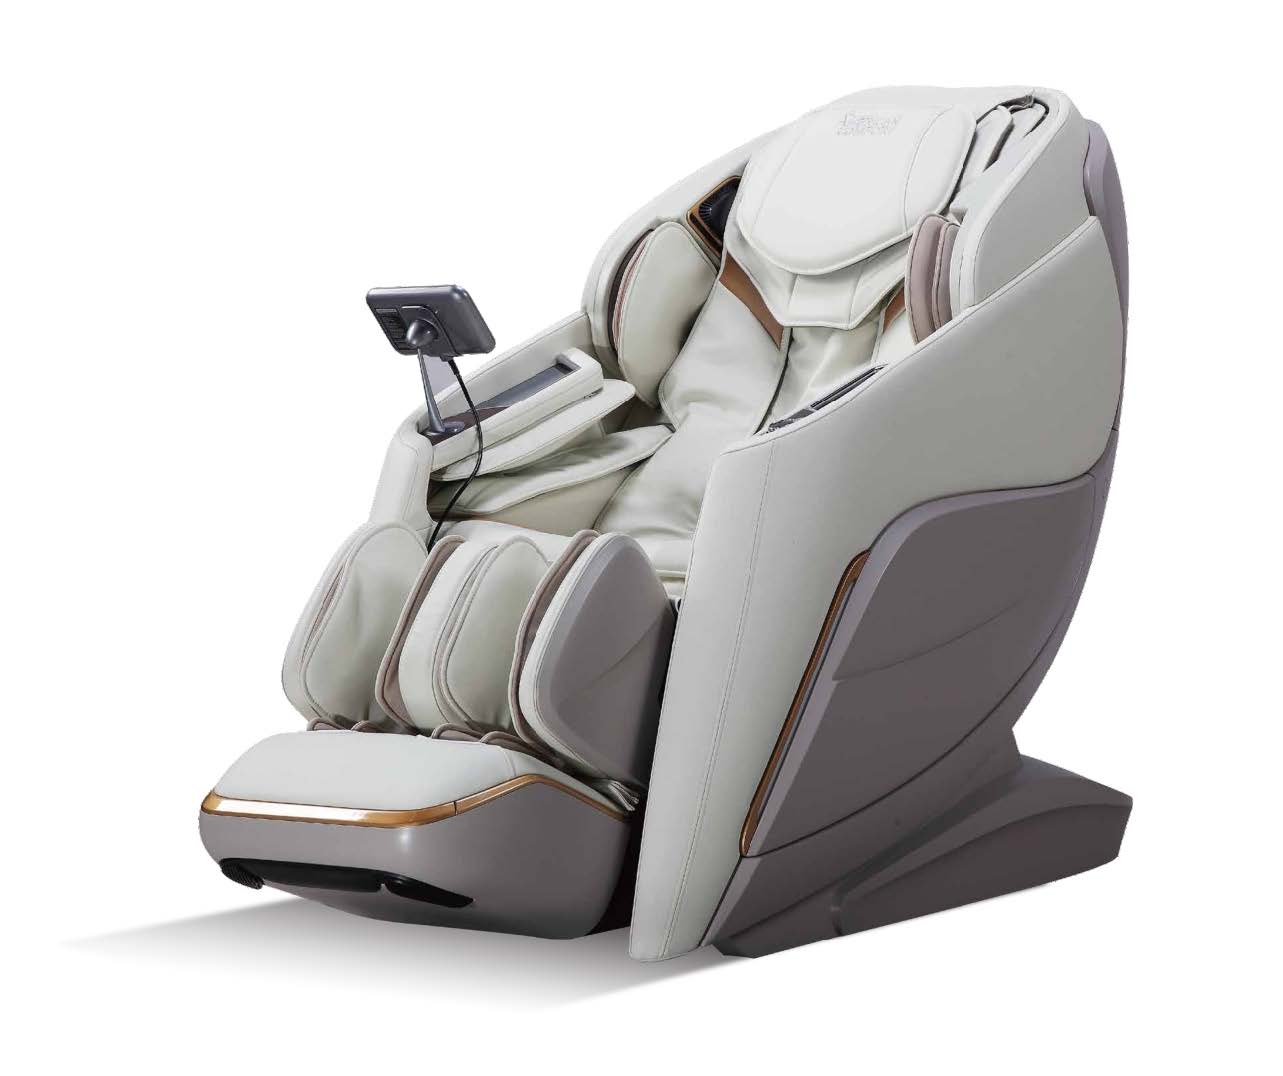 5D Massage Chair in bijnor, 5D Massage Chair Manufacturers